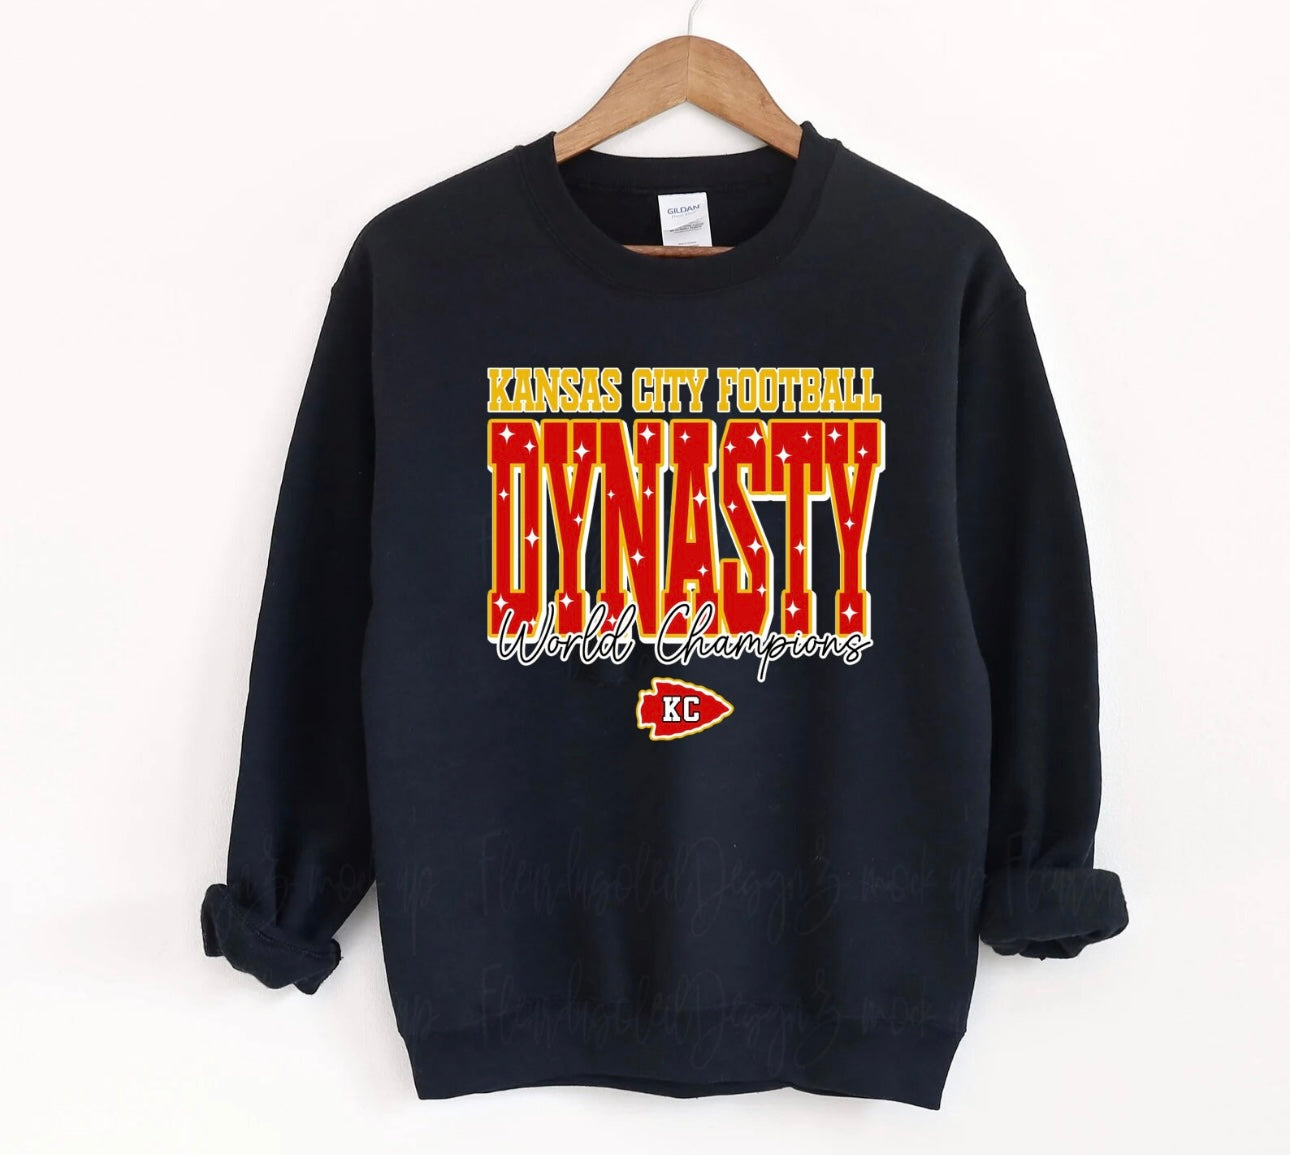 Kansas City Football Dynasty World Champions Black Sweatshirt